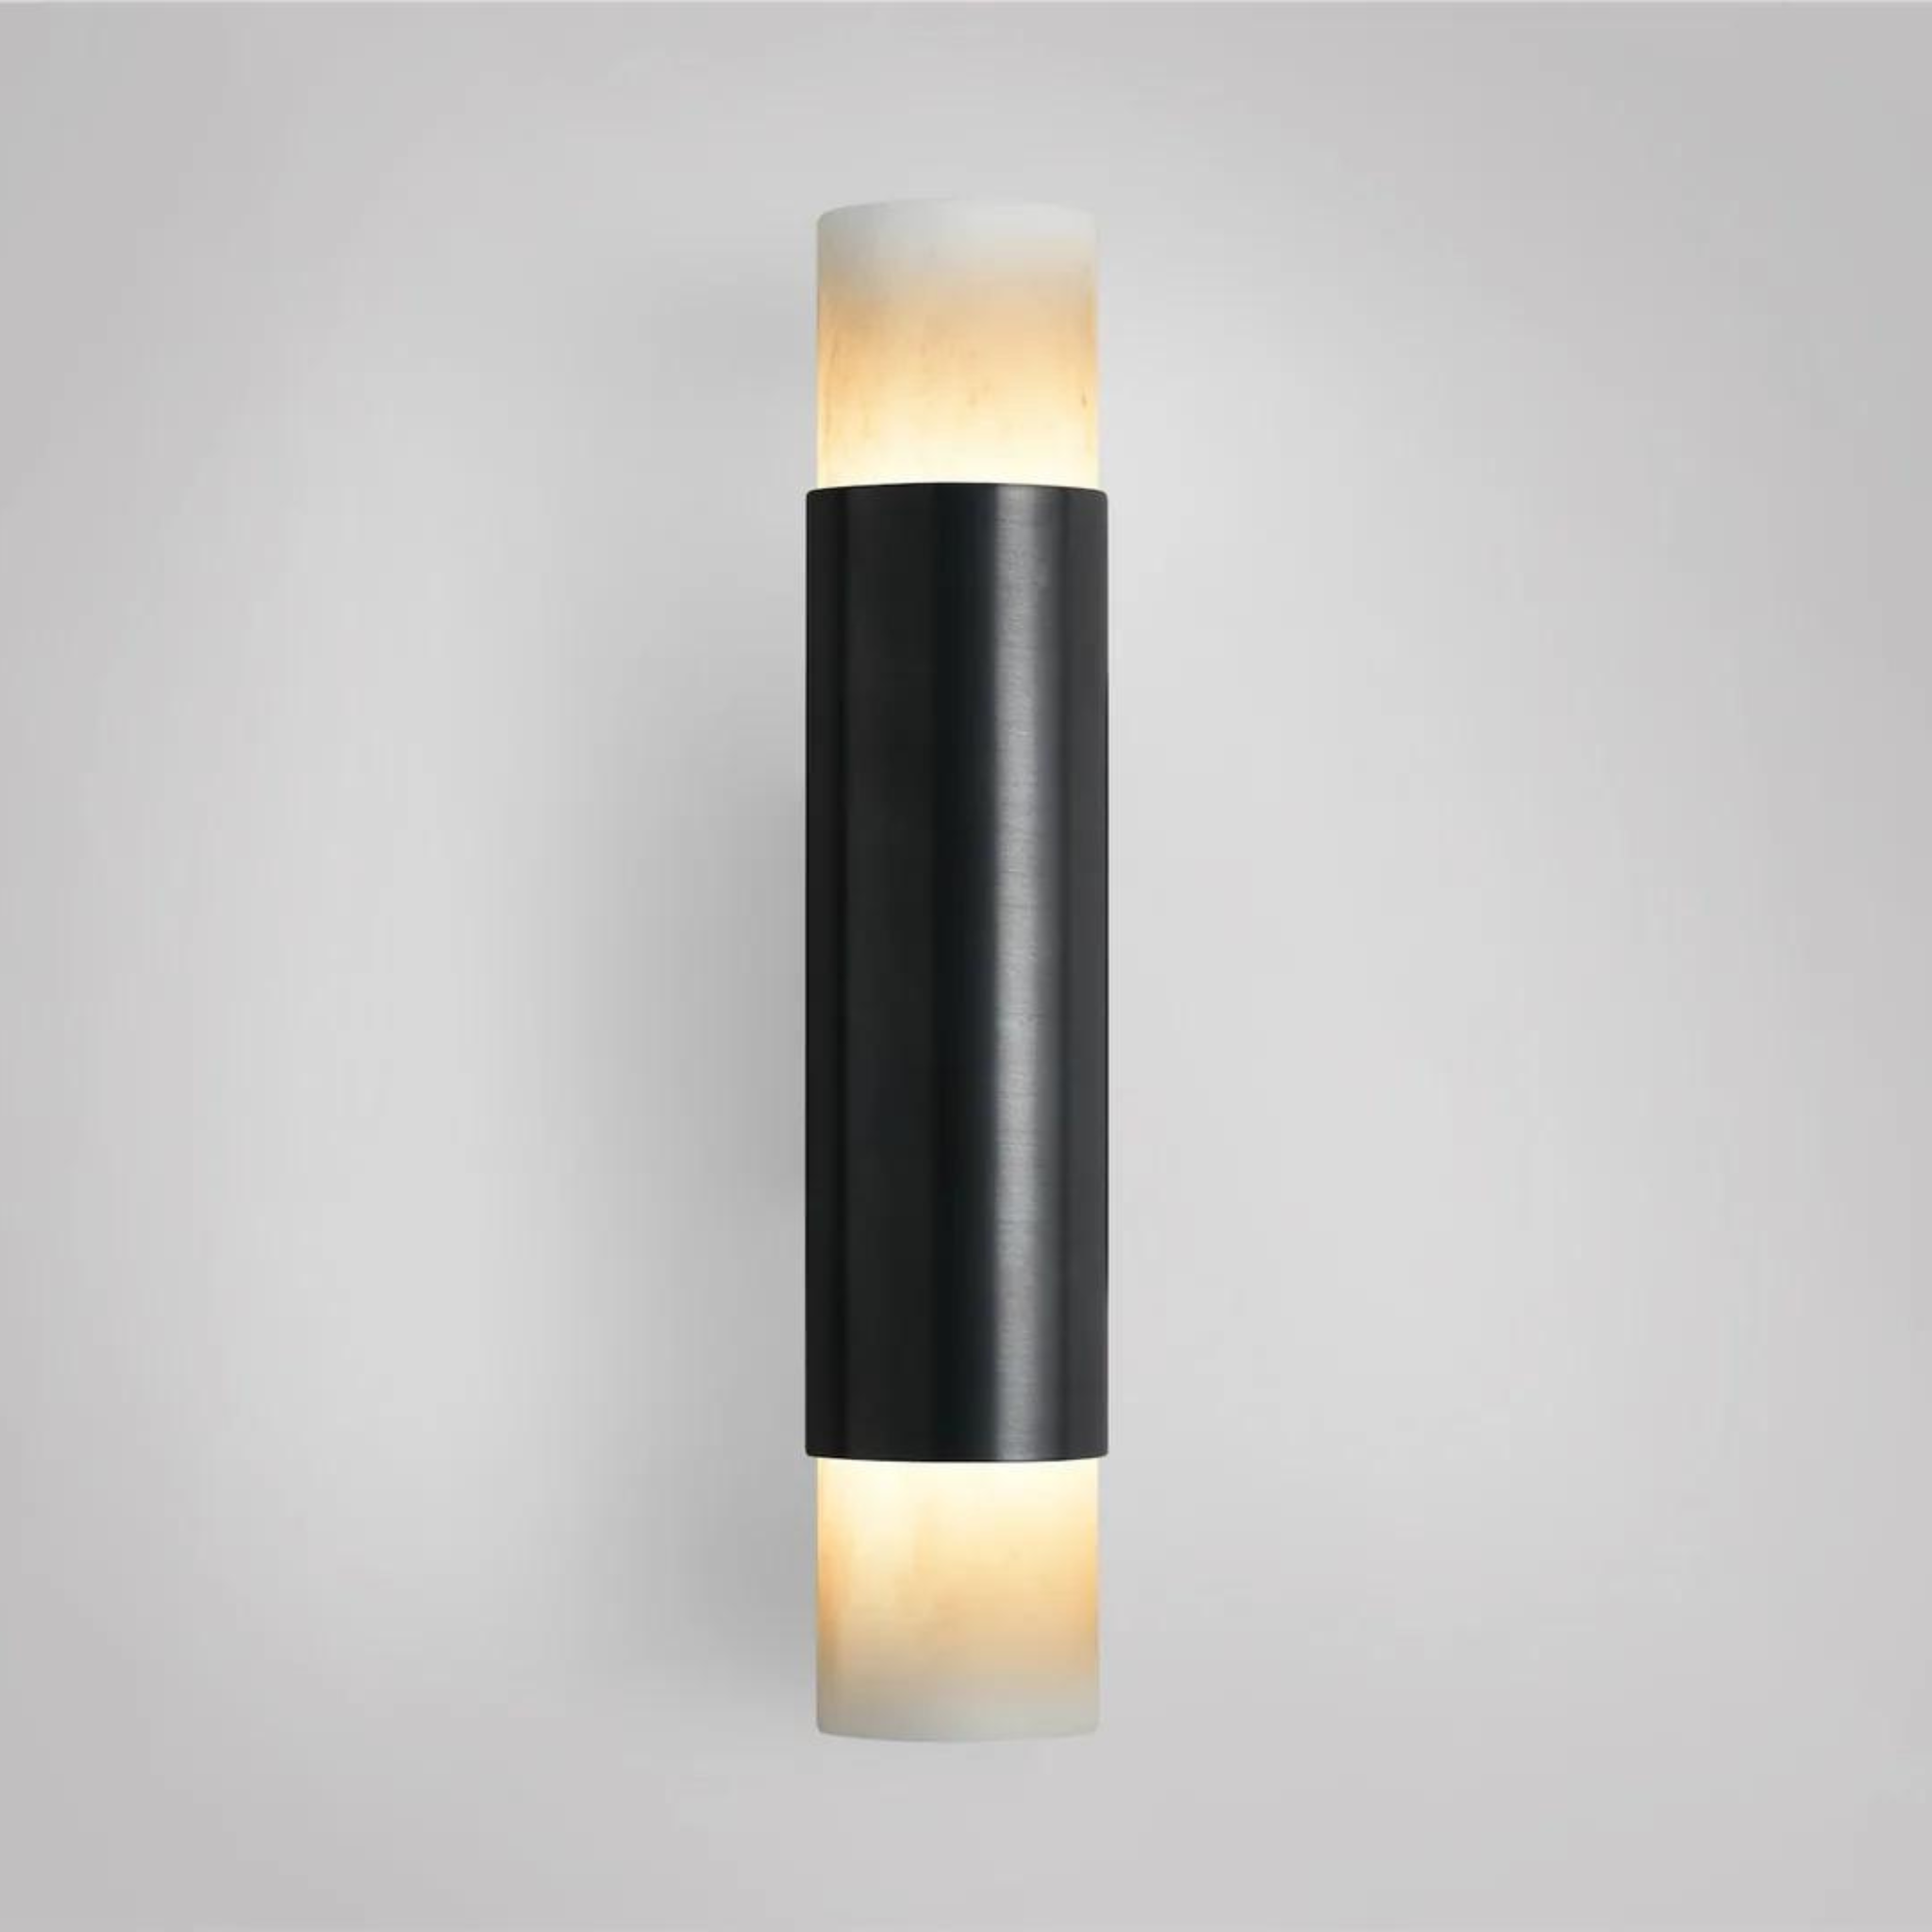 ROMA WALL LIGHT (SATIN BRASS & BRONZE) - CTO LIGHTING | Modern Furniture + Decor